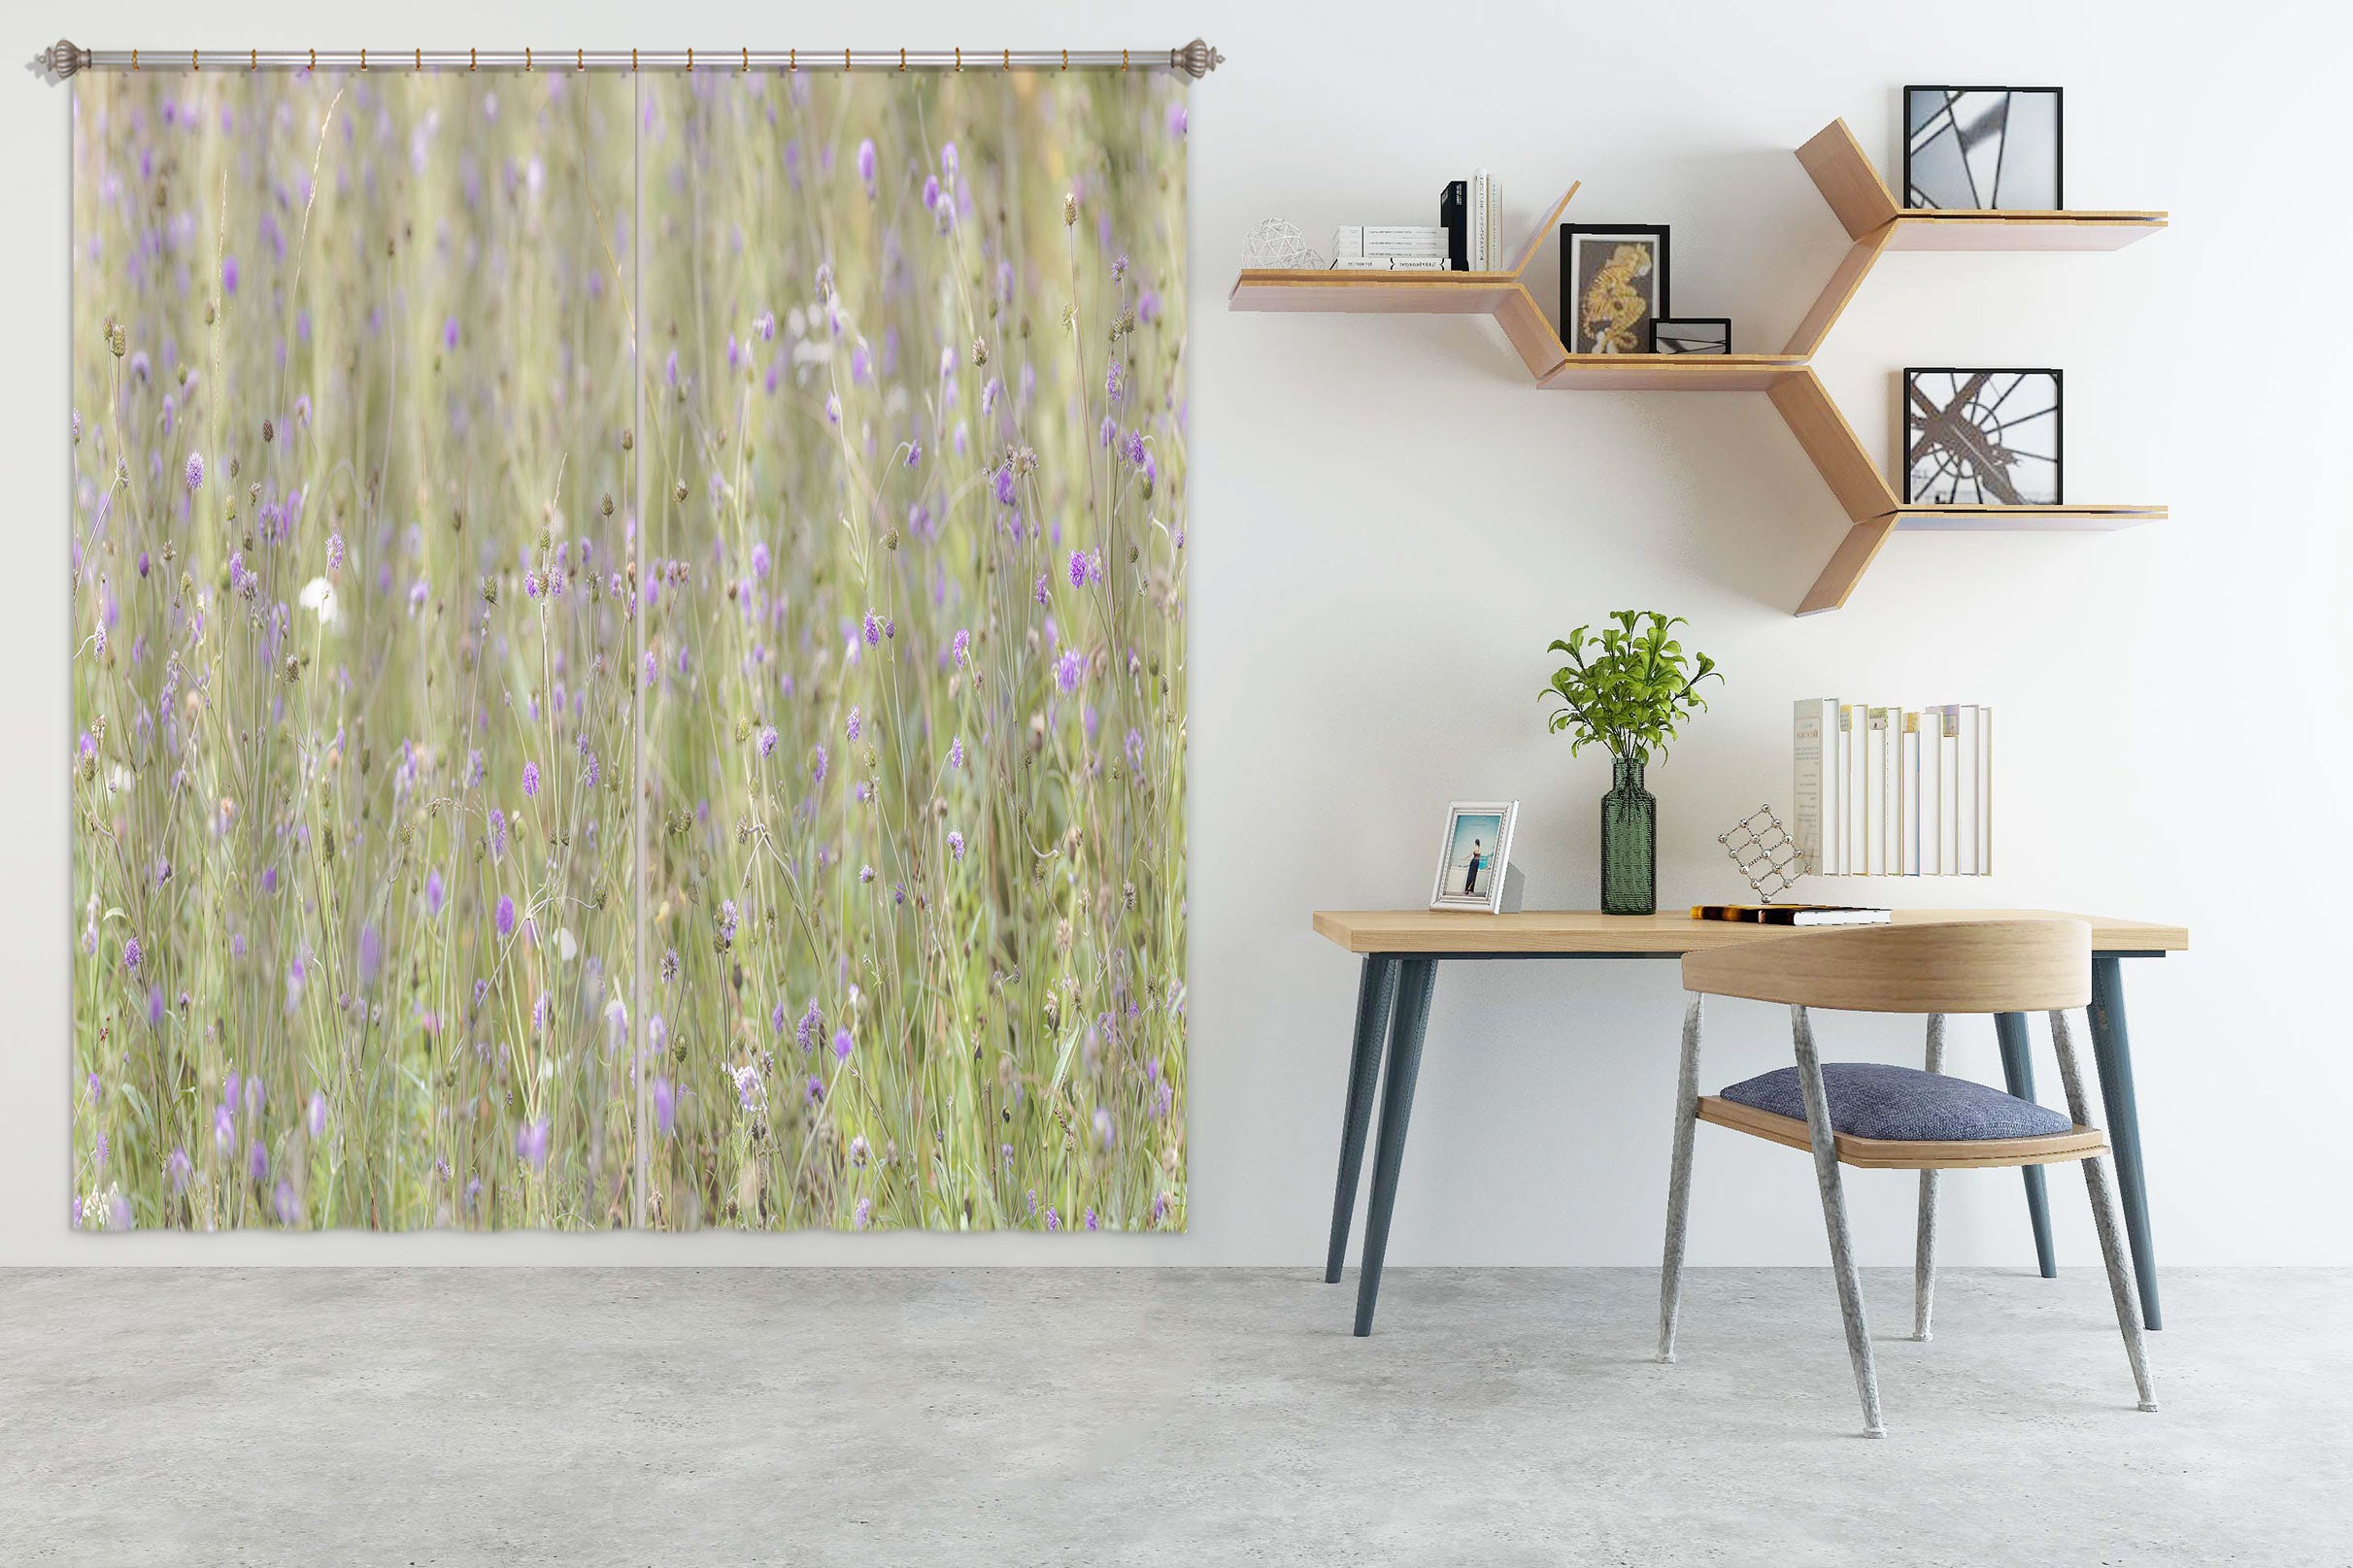 3D Lawn Wildflowers 6547 Assaf Frank Curtain Curtains Drapes